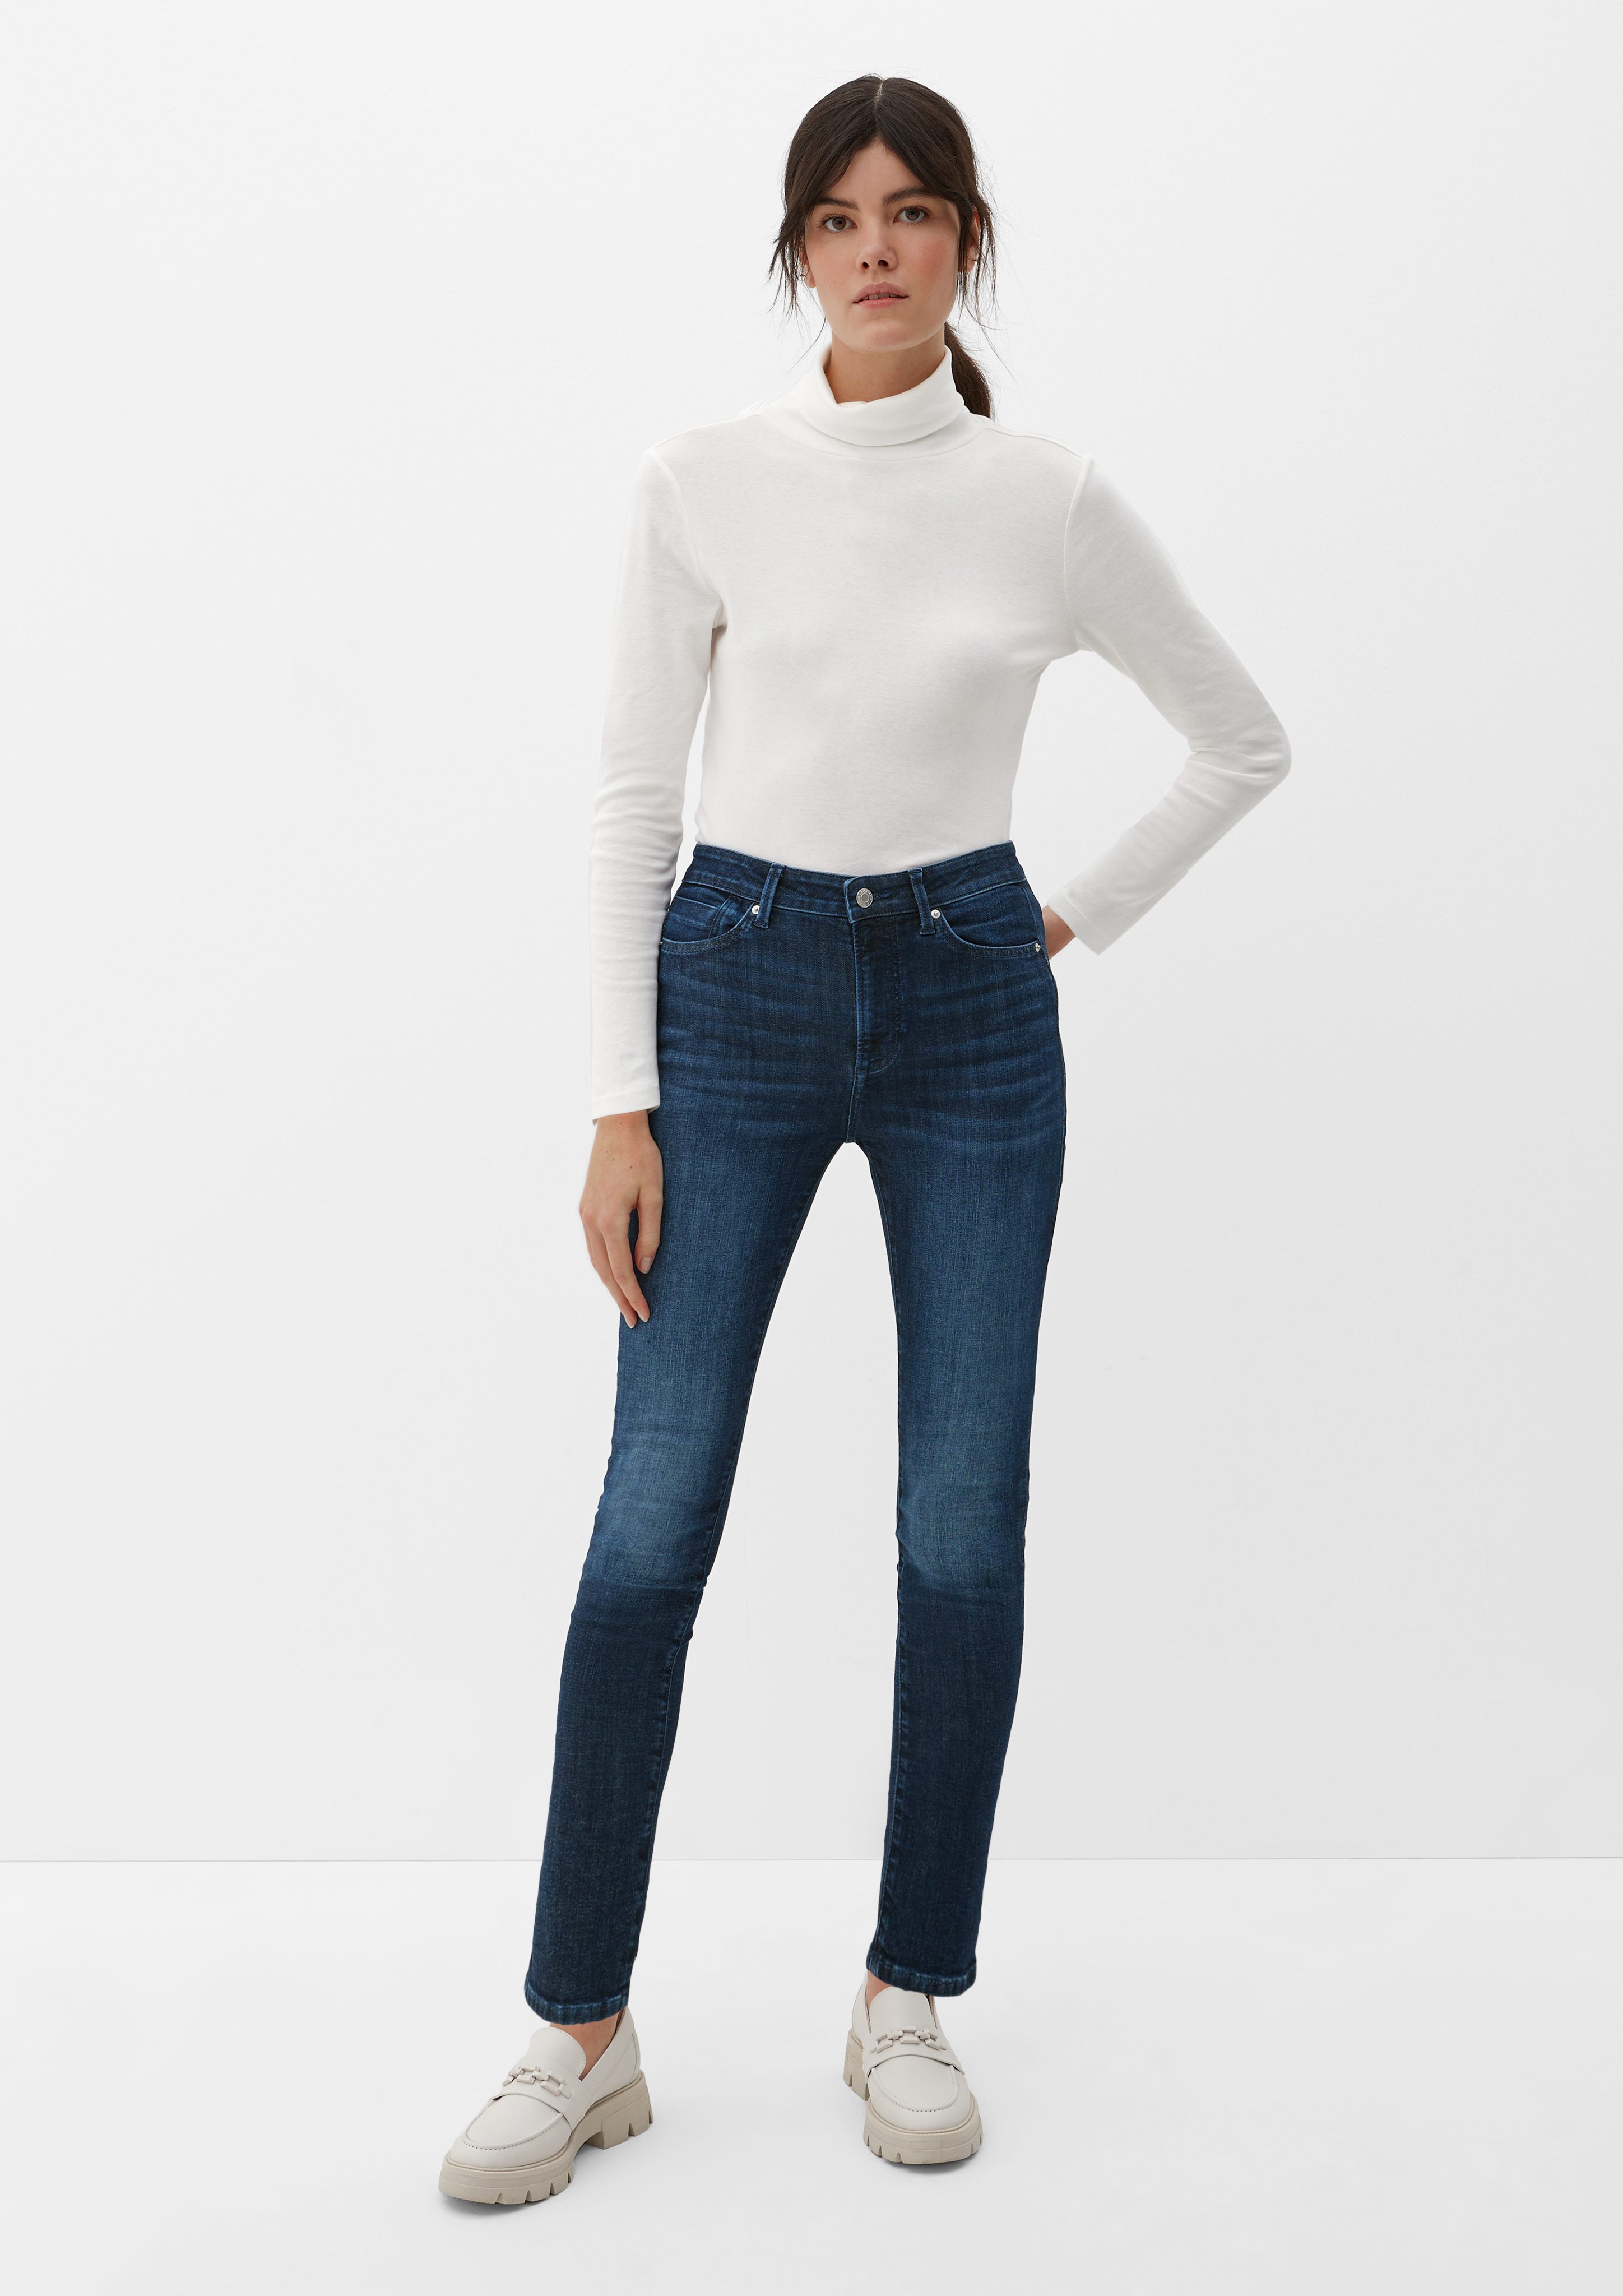 Izabell Jeans Fit Leg High / Skinny s.Oliver / Skinny Waschung Rise / 5-Pocket-Jeans dunkelblau